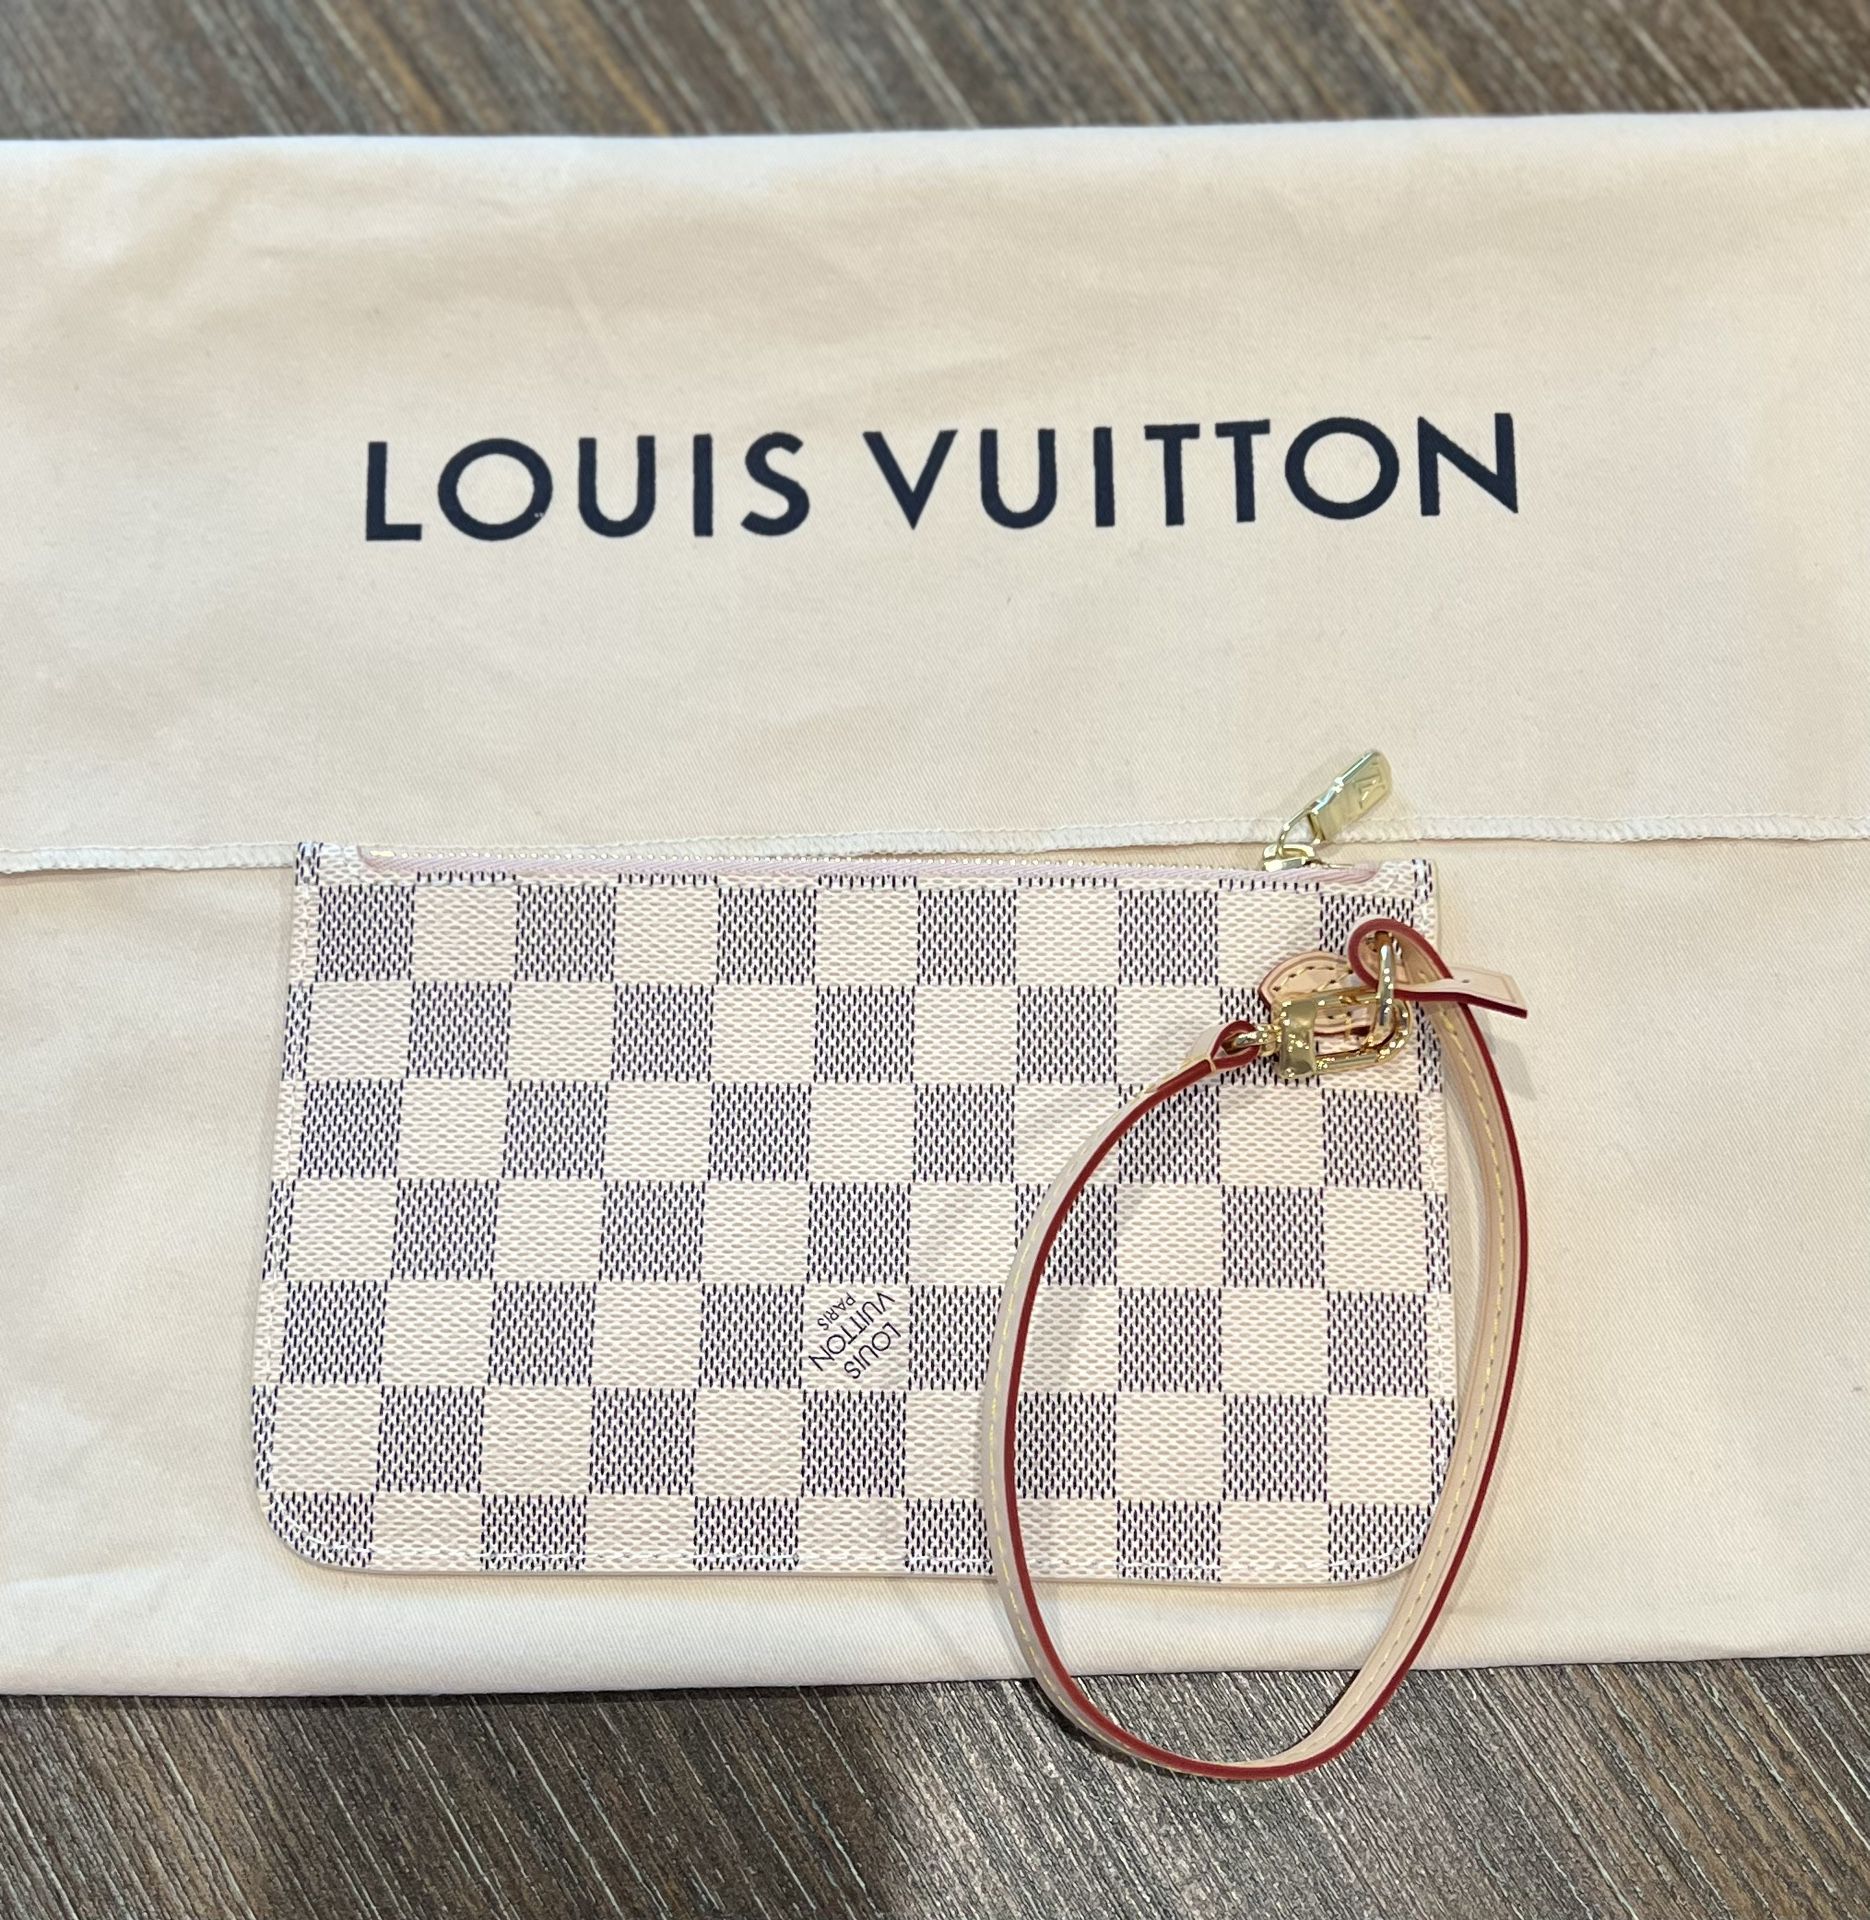 Louis Vuitton Never Full Pm Small for Sale in Schertz, TX - OfferUp